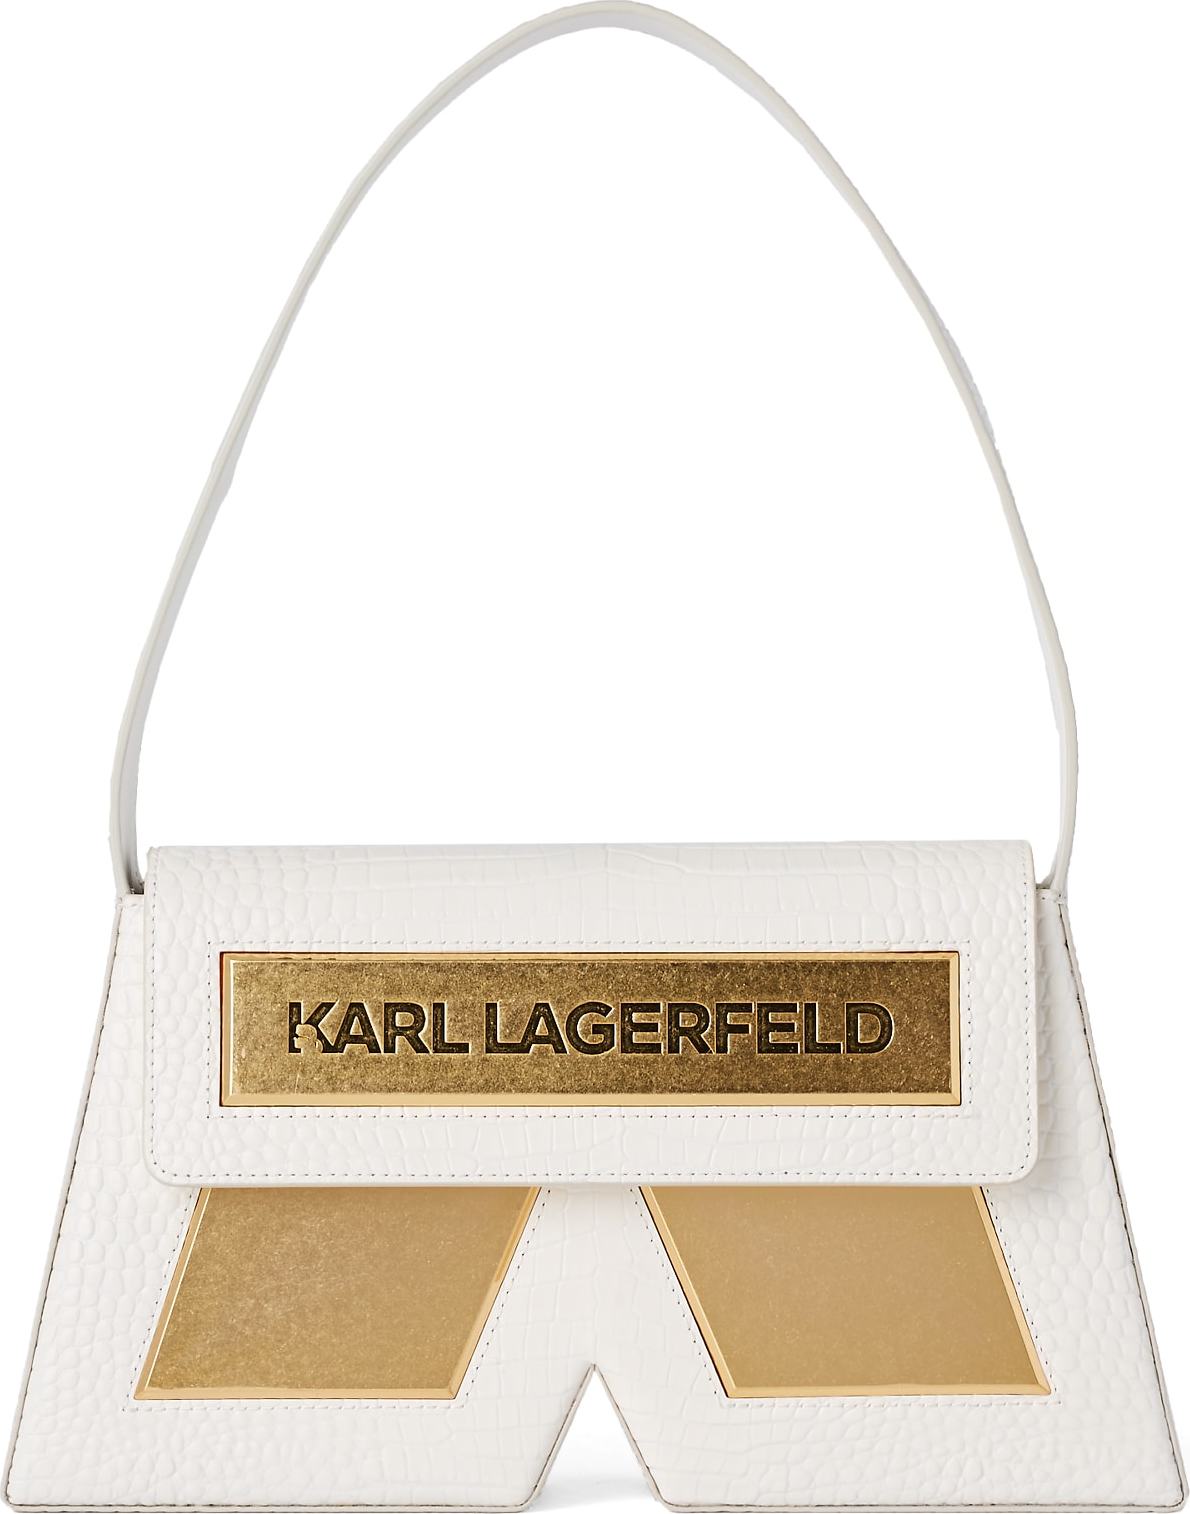 Karl Lagerfeld Taška přes rameno zlatá / bílá